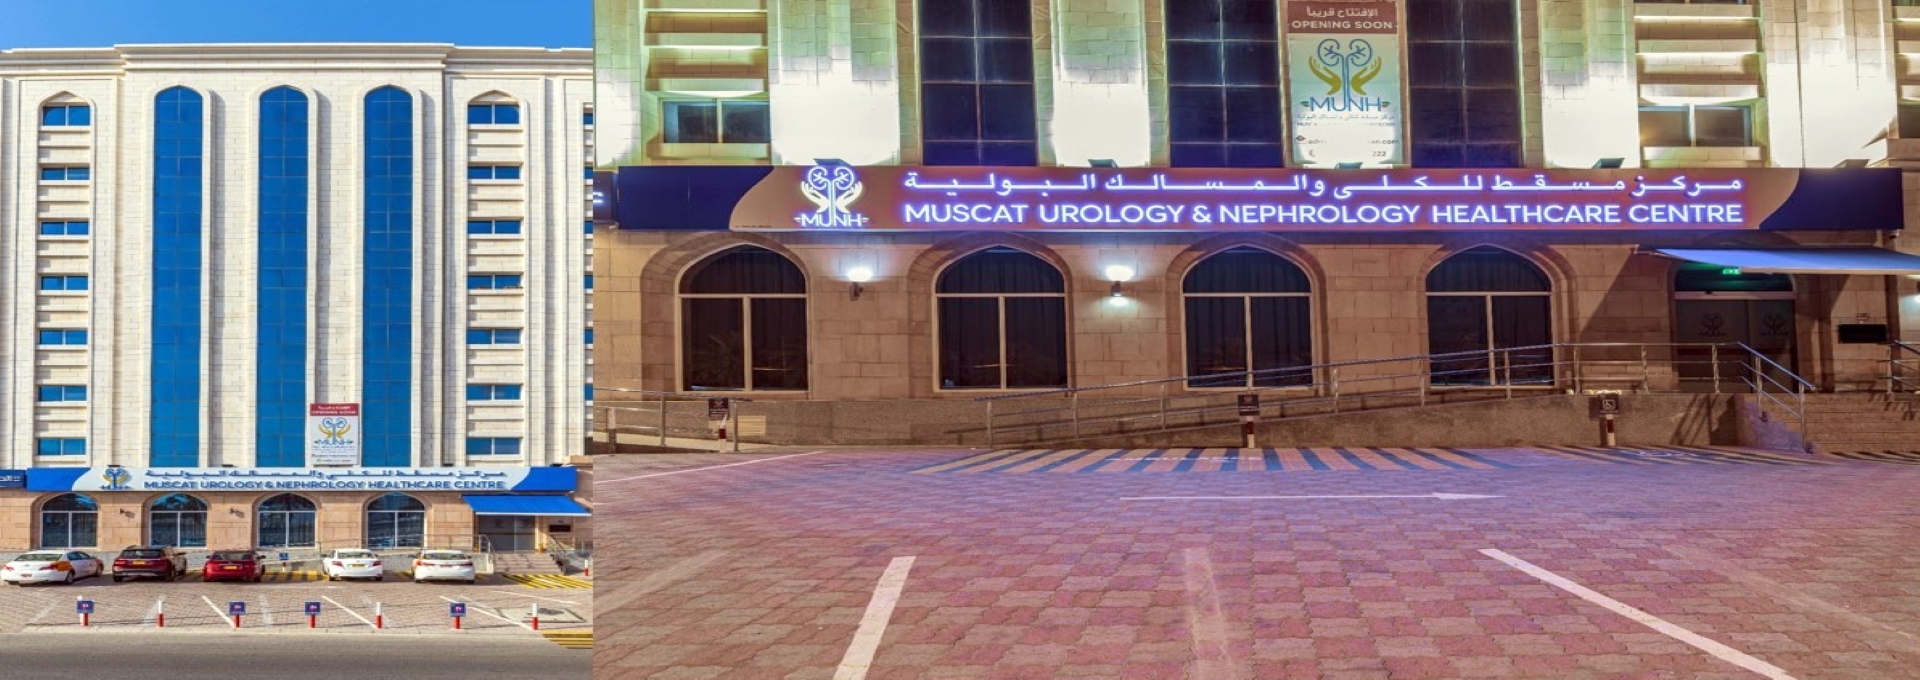 Urology and Nephrology Healthcare Centre